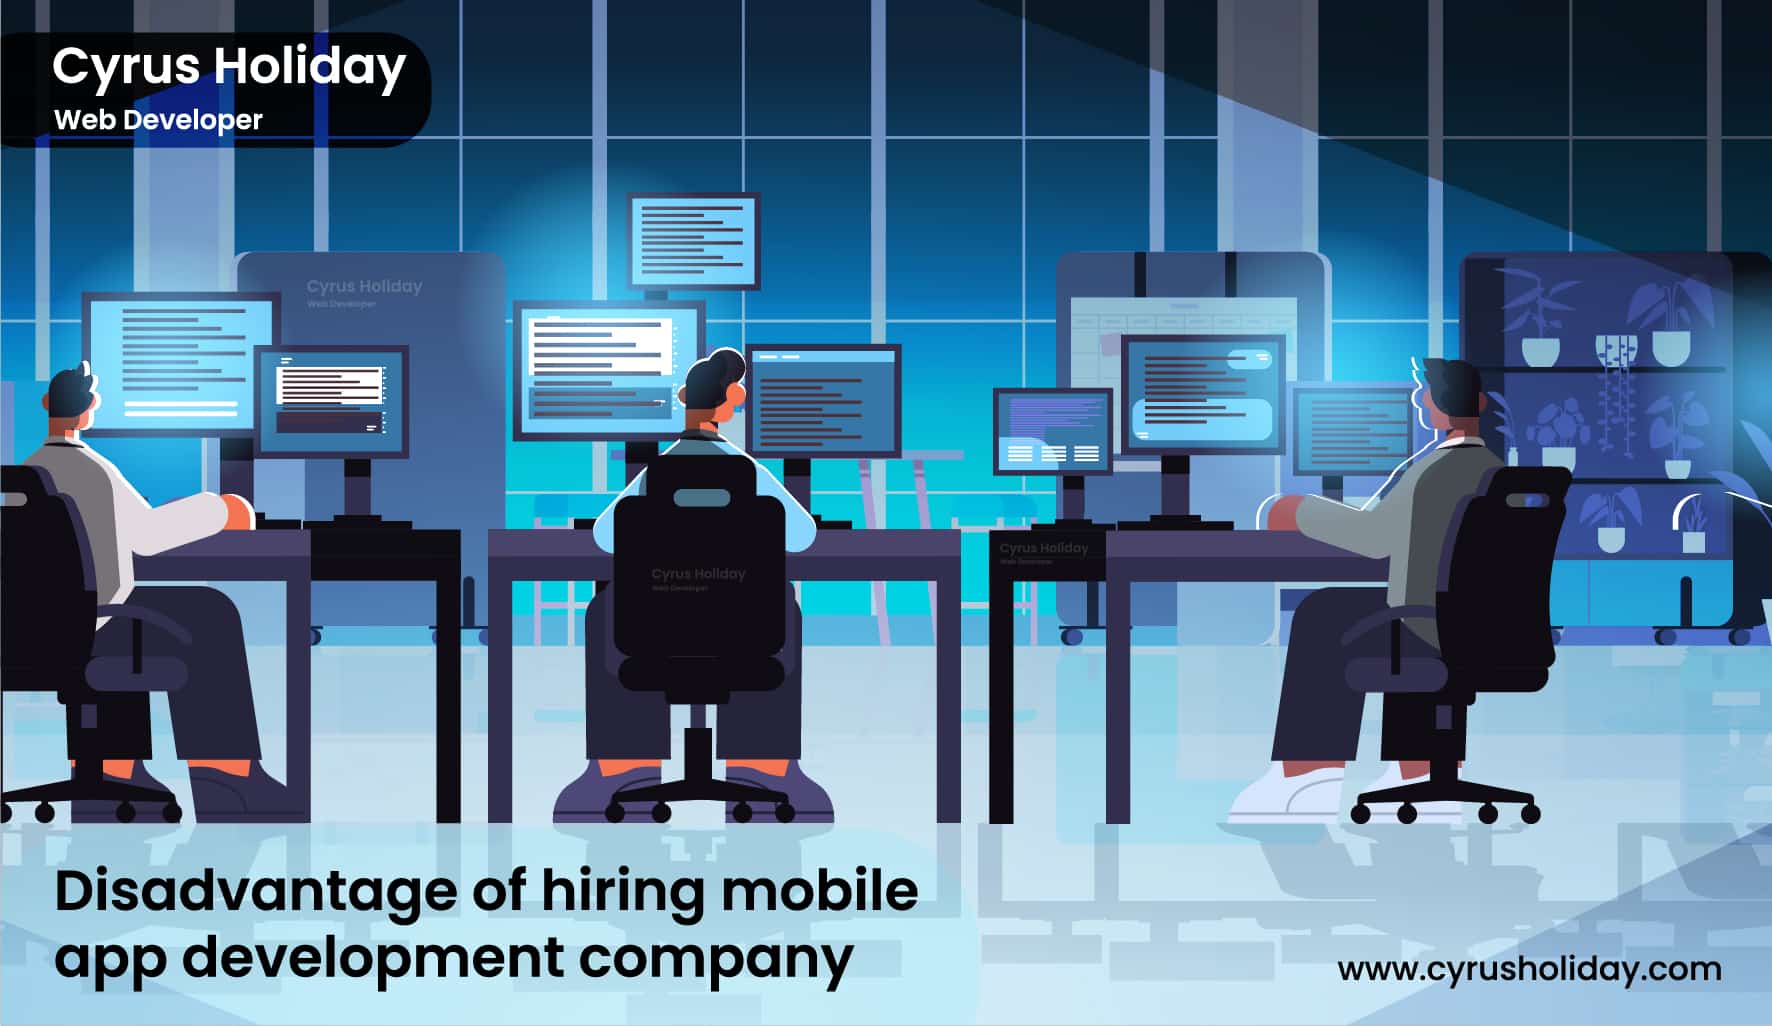 Benefits of hiring mobile app development